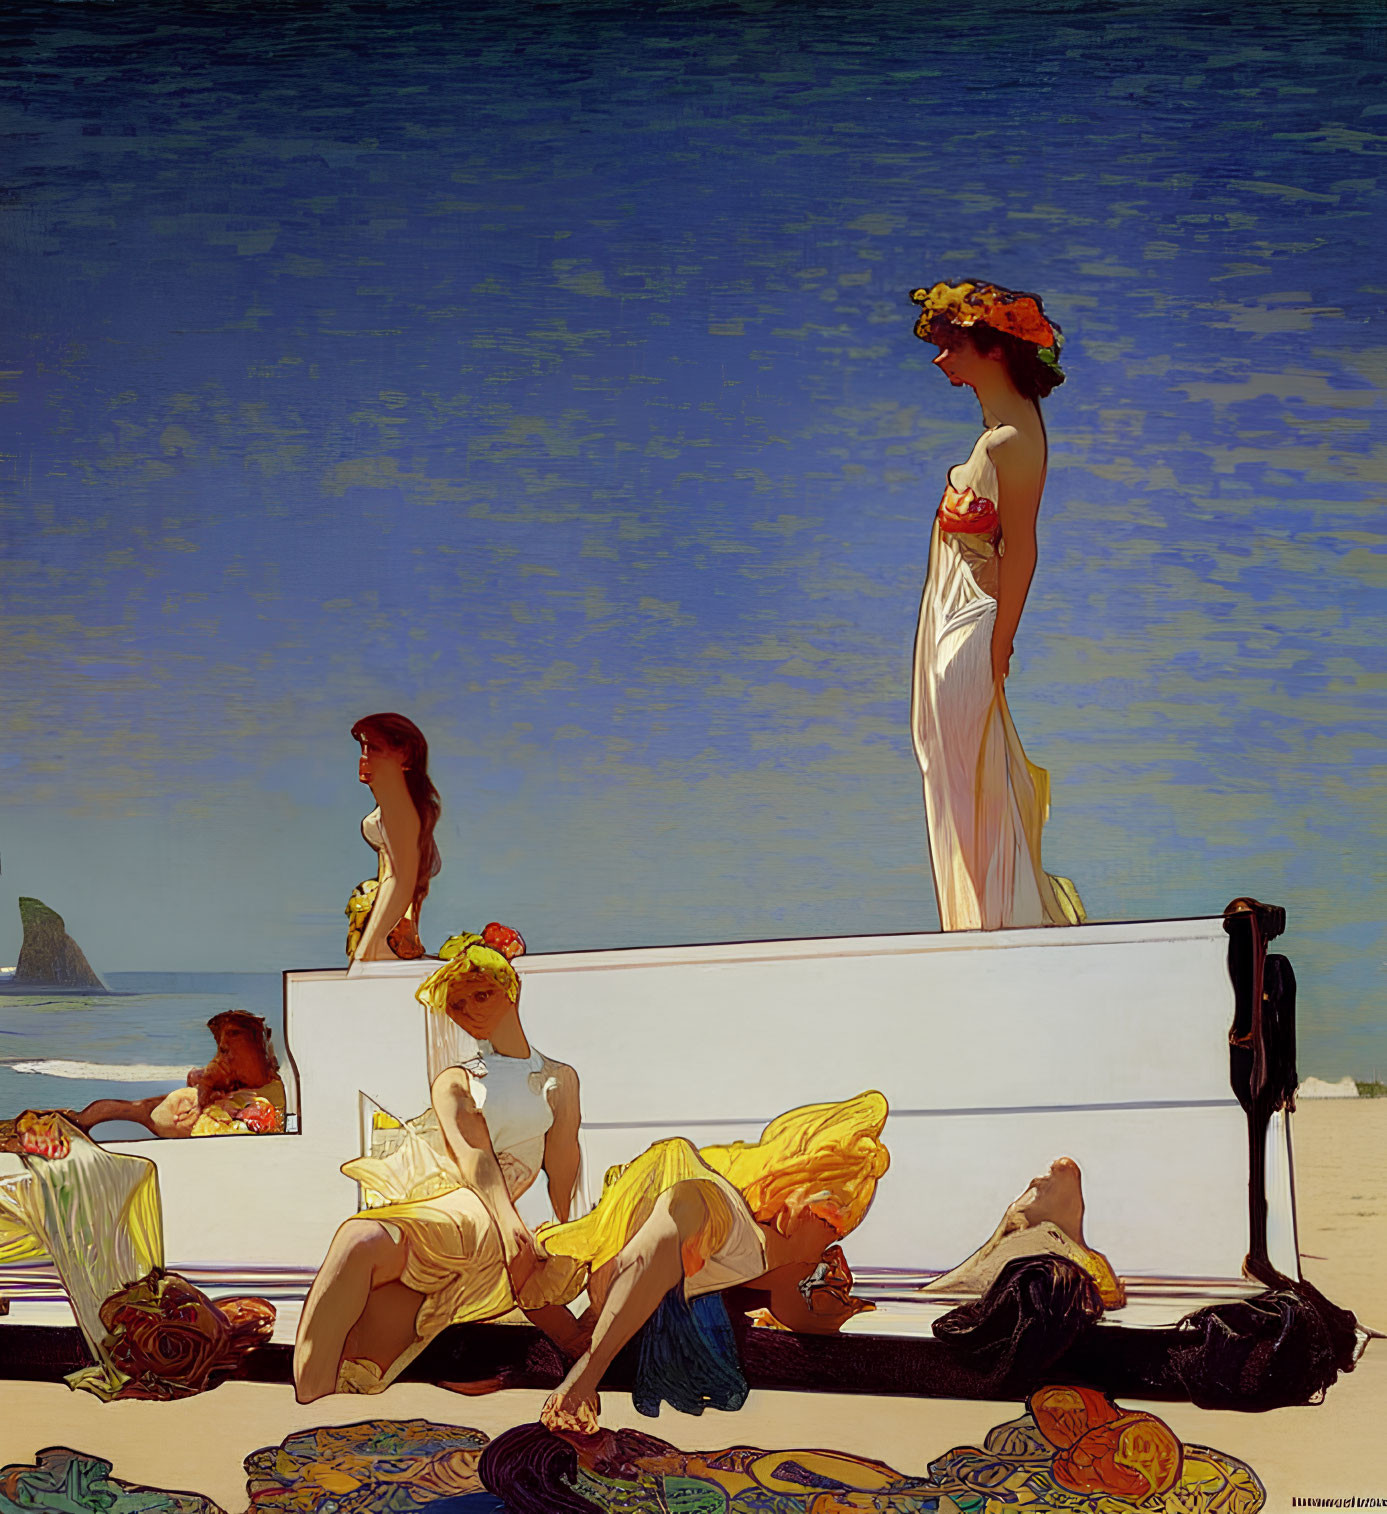 Elegantly dressed women by the sea in serene beauty